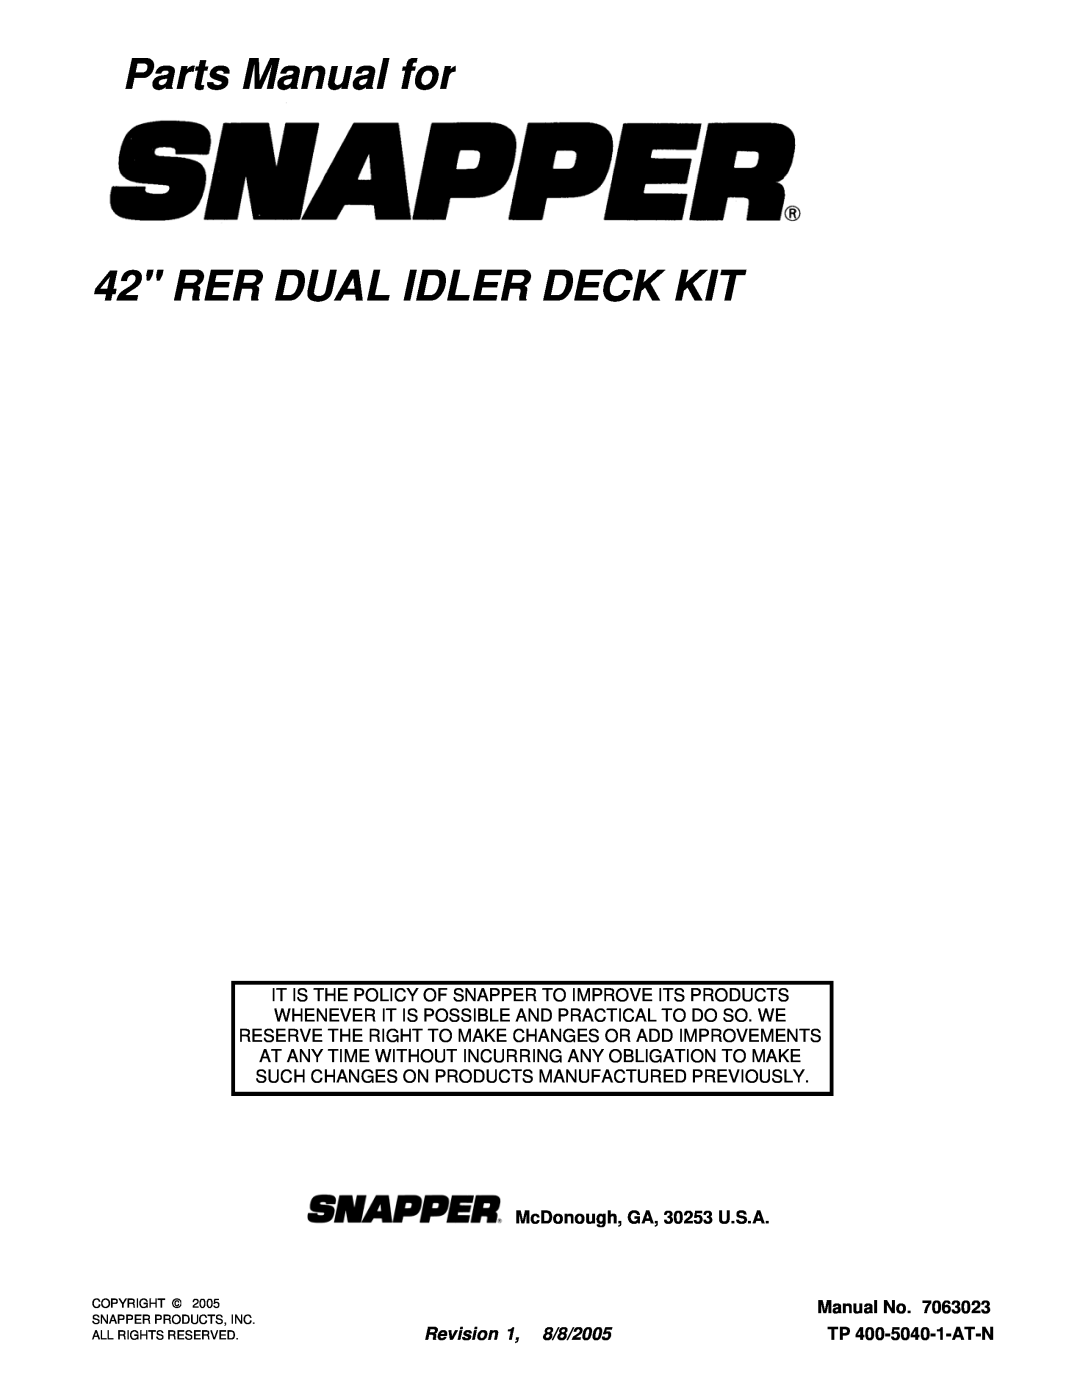 Snapper 7063023 Parts Manual for 42 RER DUAL IDLER DECK KIT, TP 400-5040-1-AT-N, McDonough, GA, 30253 U.S.A, Manual No 